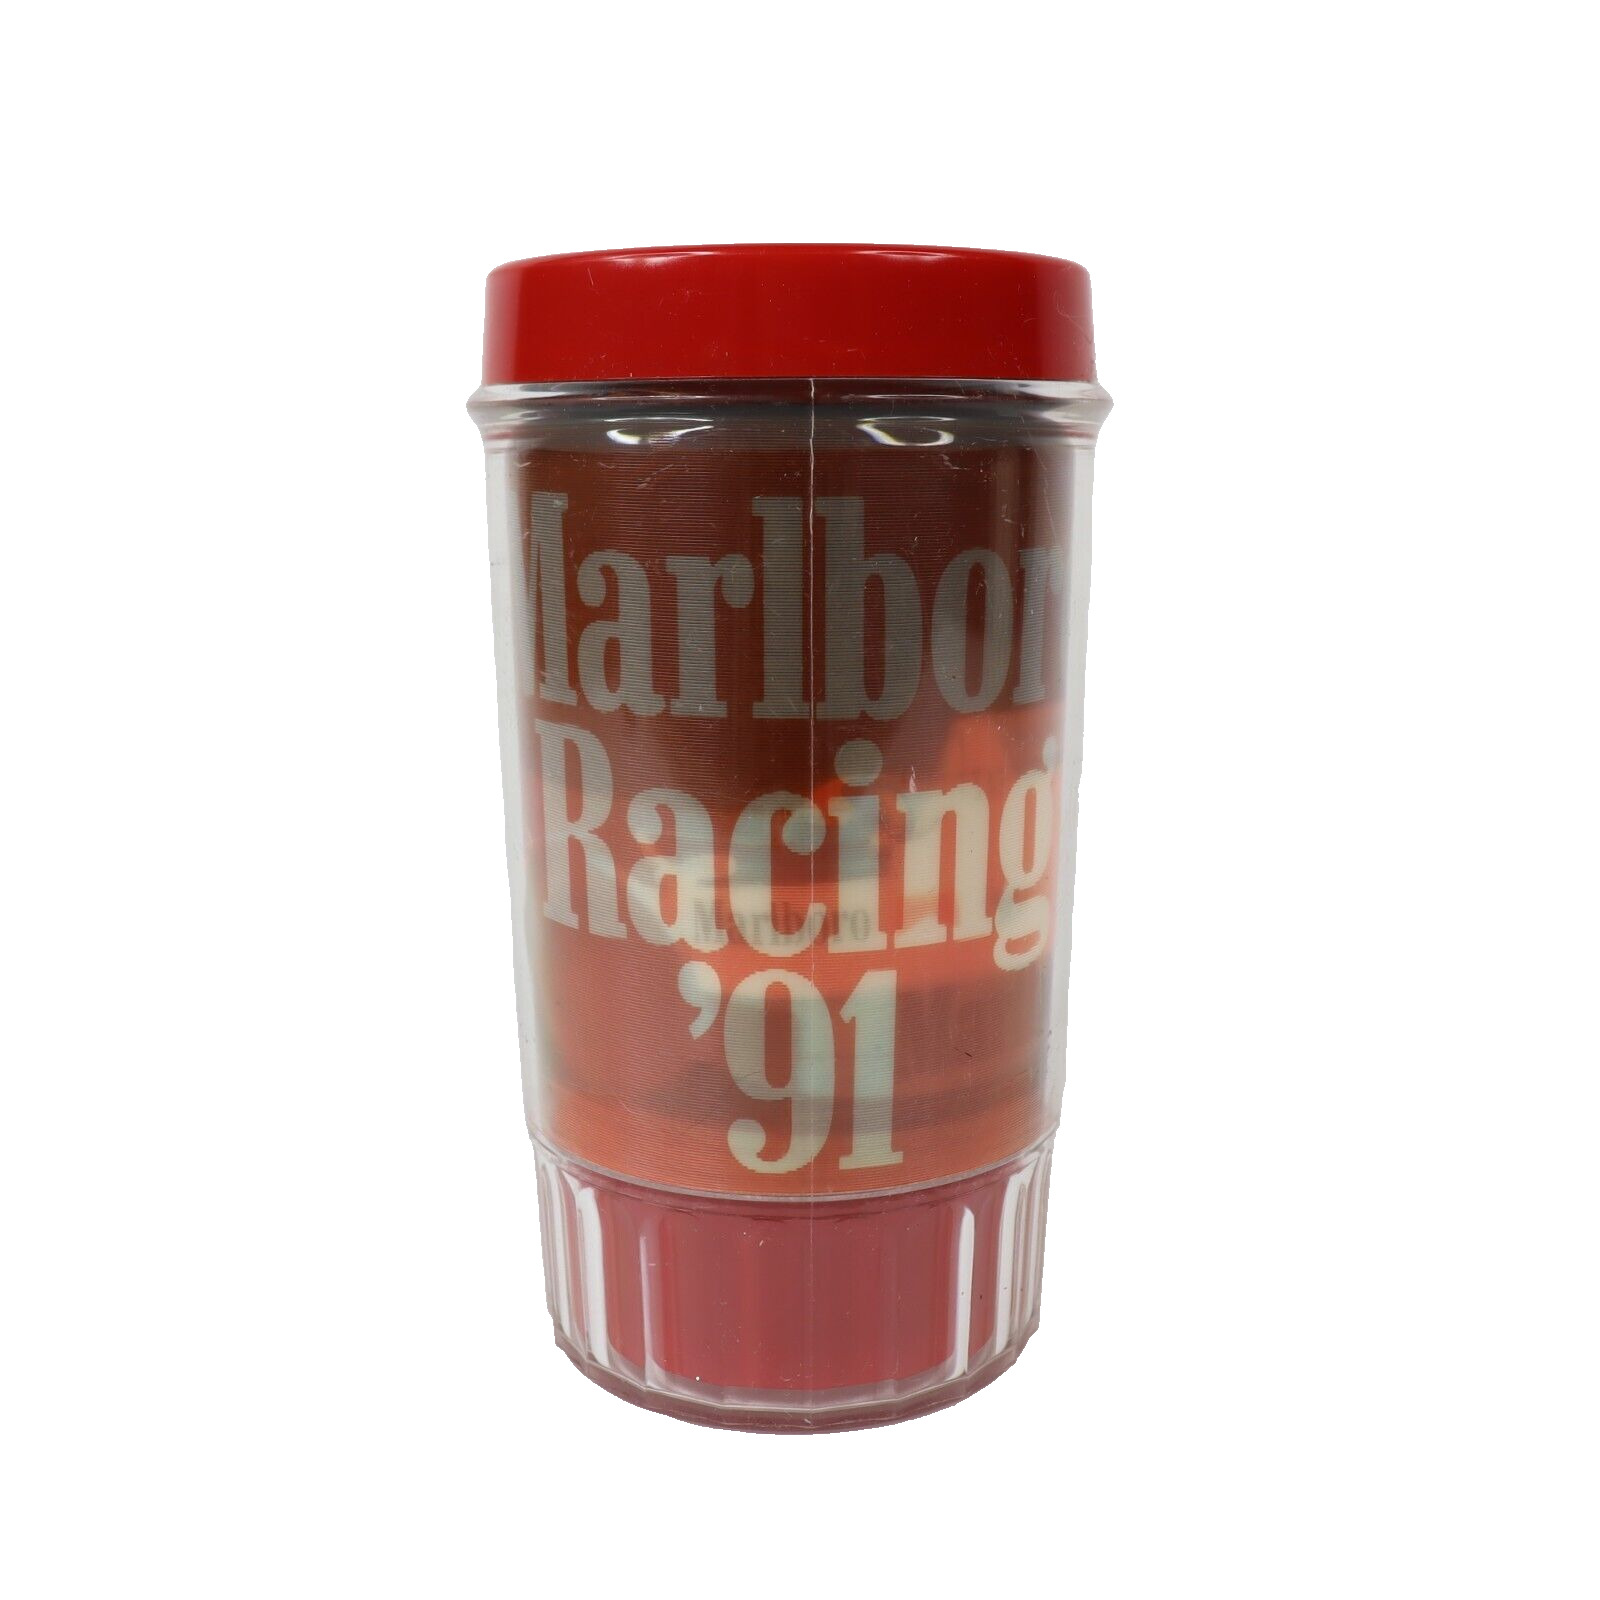 1991 Marlboro Cigarettes Hologram Indy Car Racing 91 Beer Mug Cup plastic